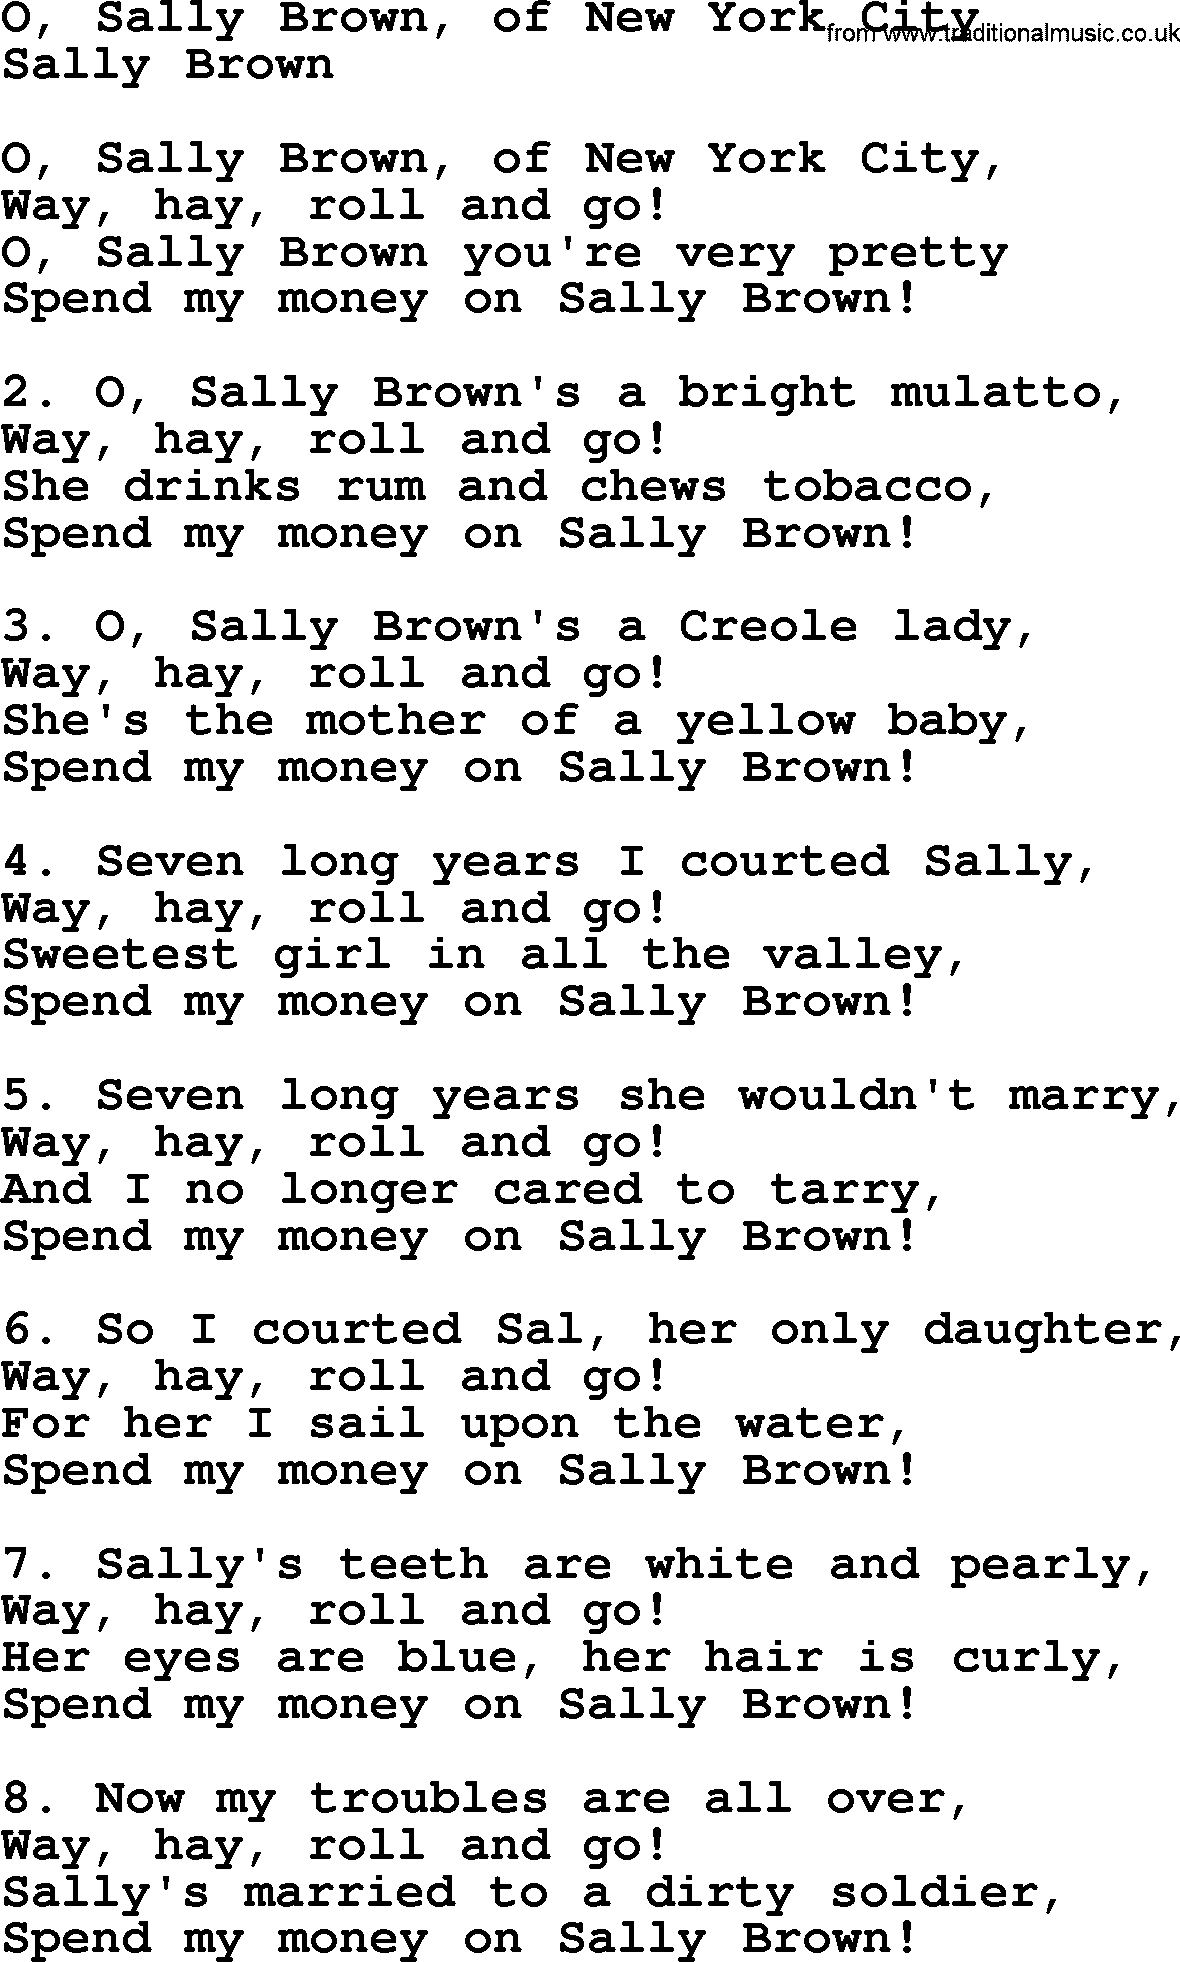 Sea Song or Shantie: O Sally Brown Of New York City, lyrics